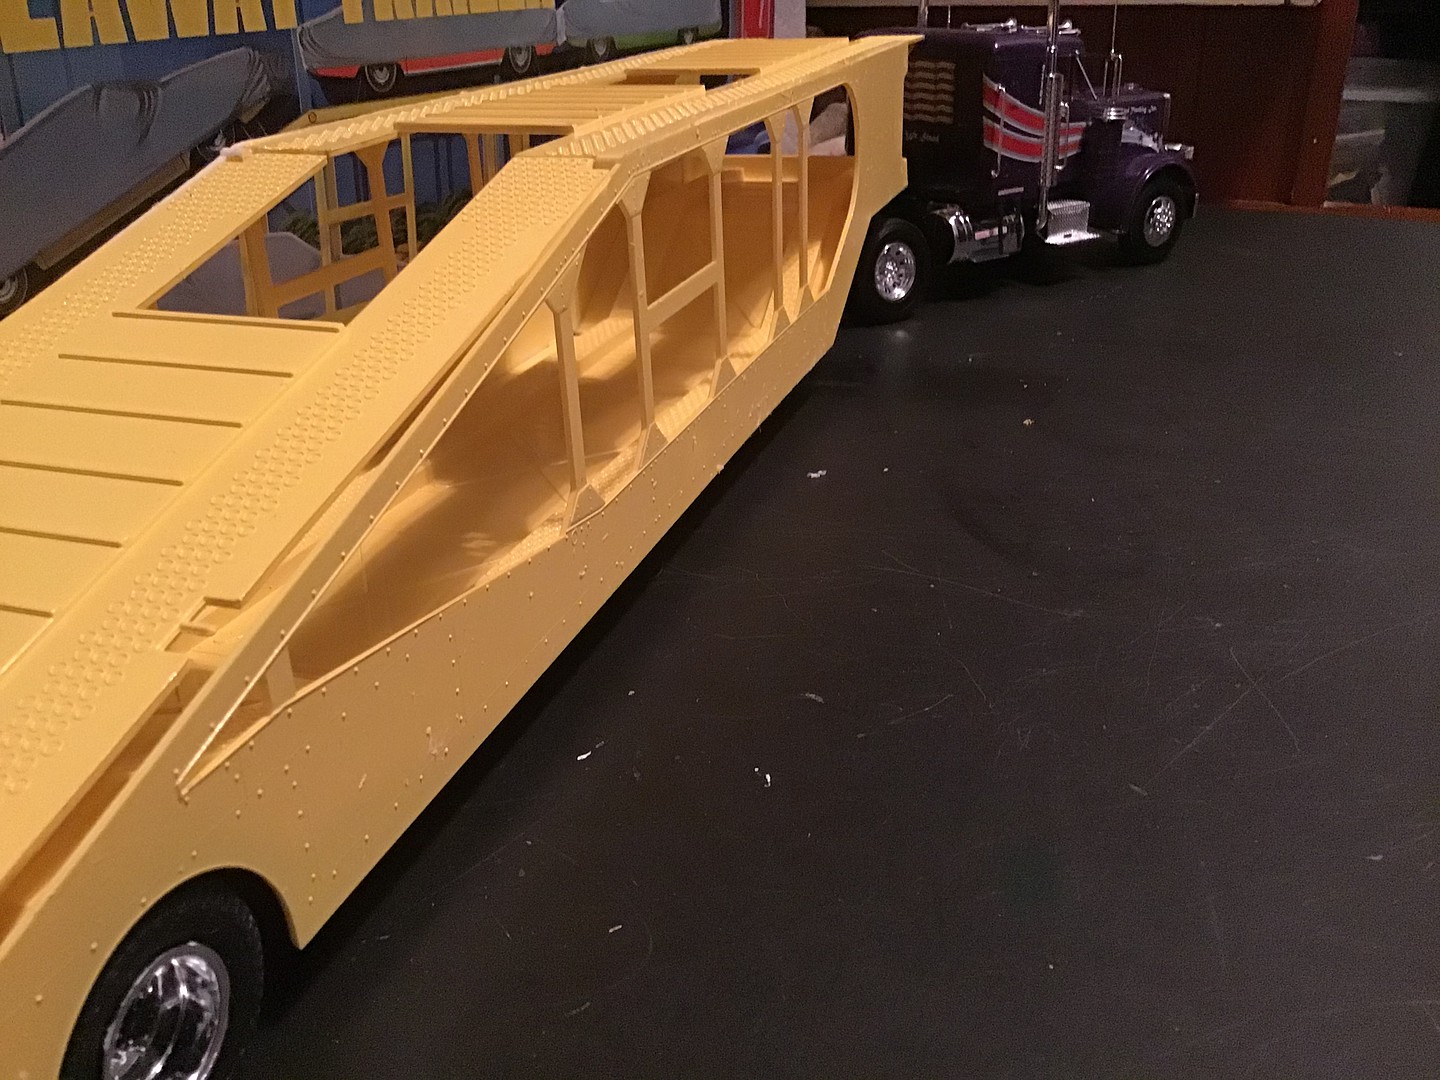 5 Car Haulaway Trailer Plastic Model Truck Vehicle Kit 1 25 Scale